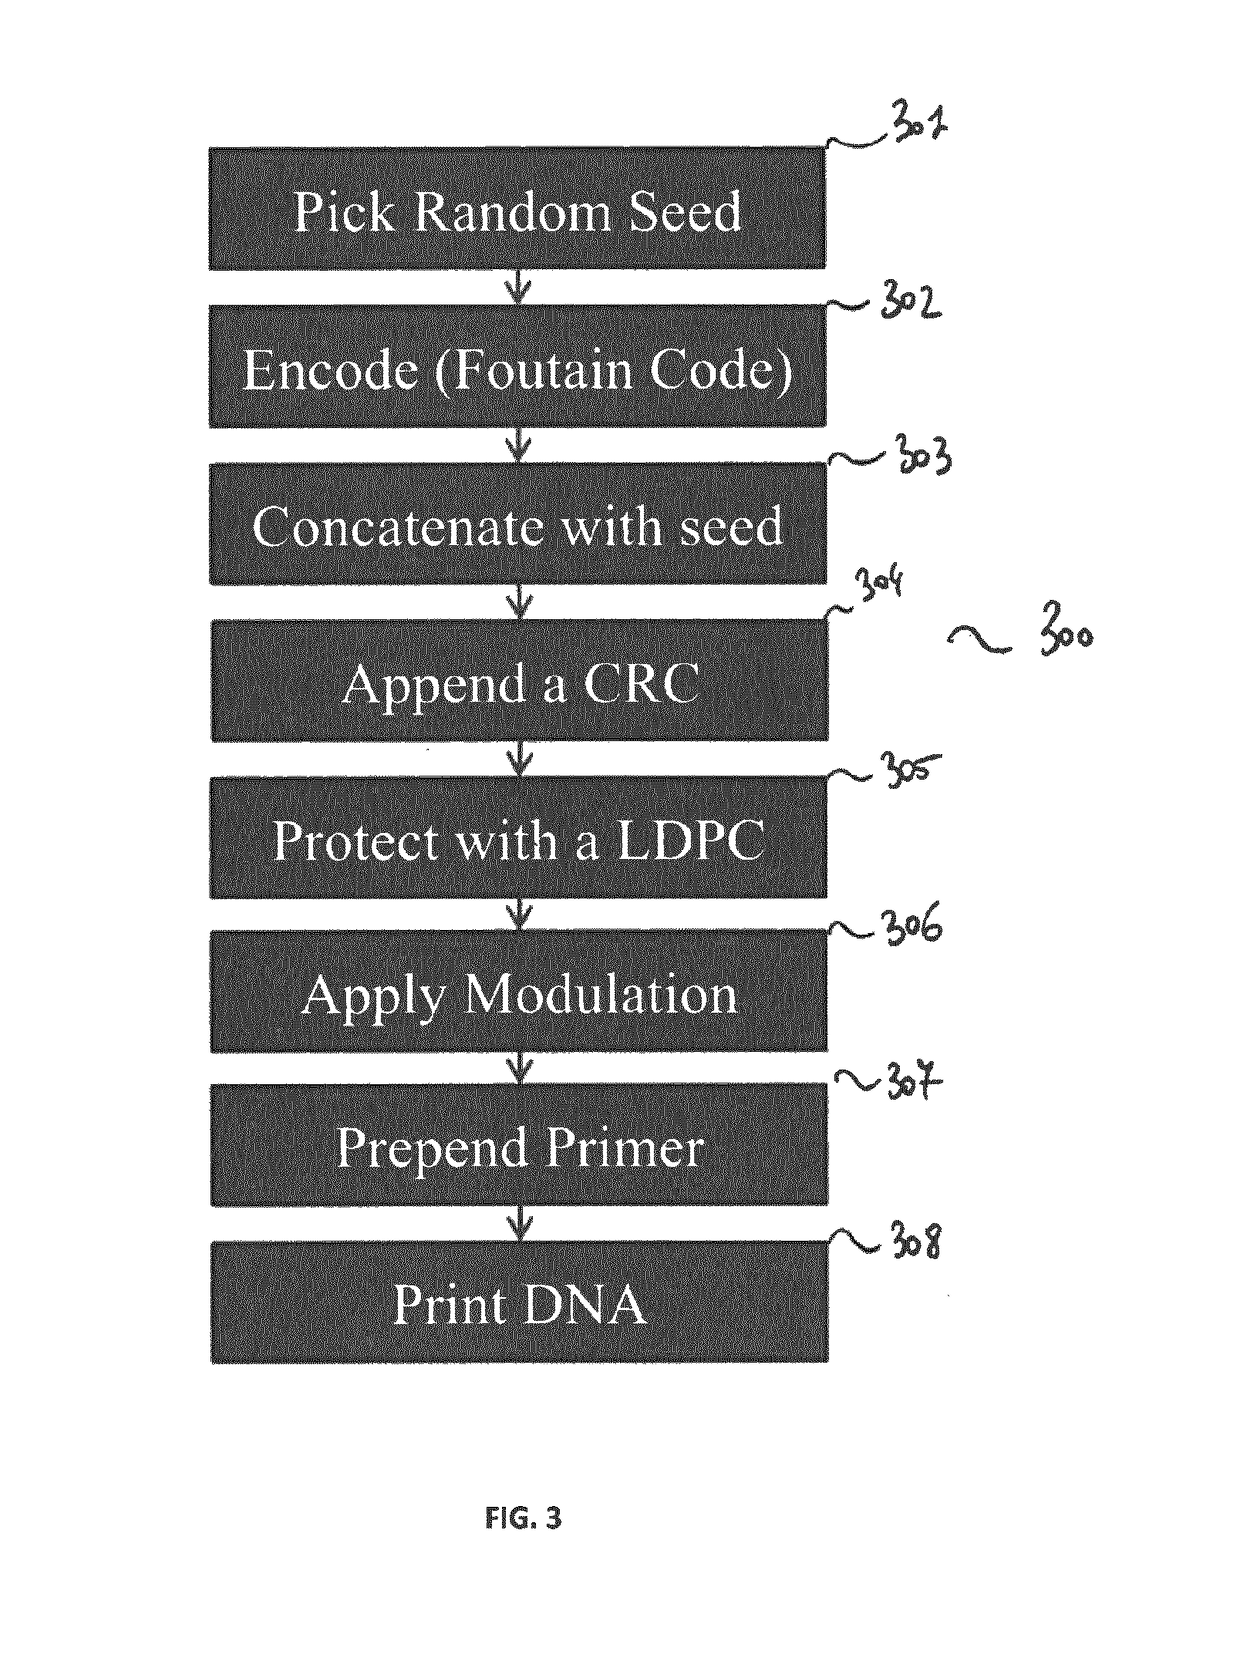 Methods for storing and reading digital data on a set of DNA strands